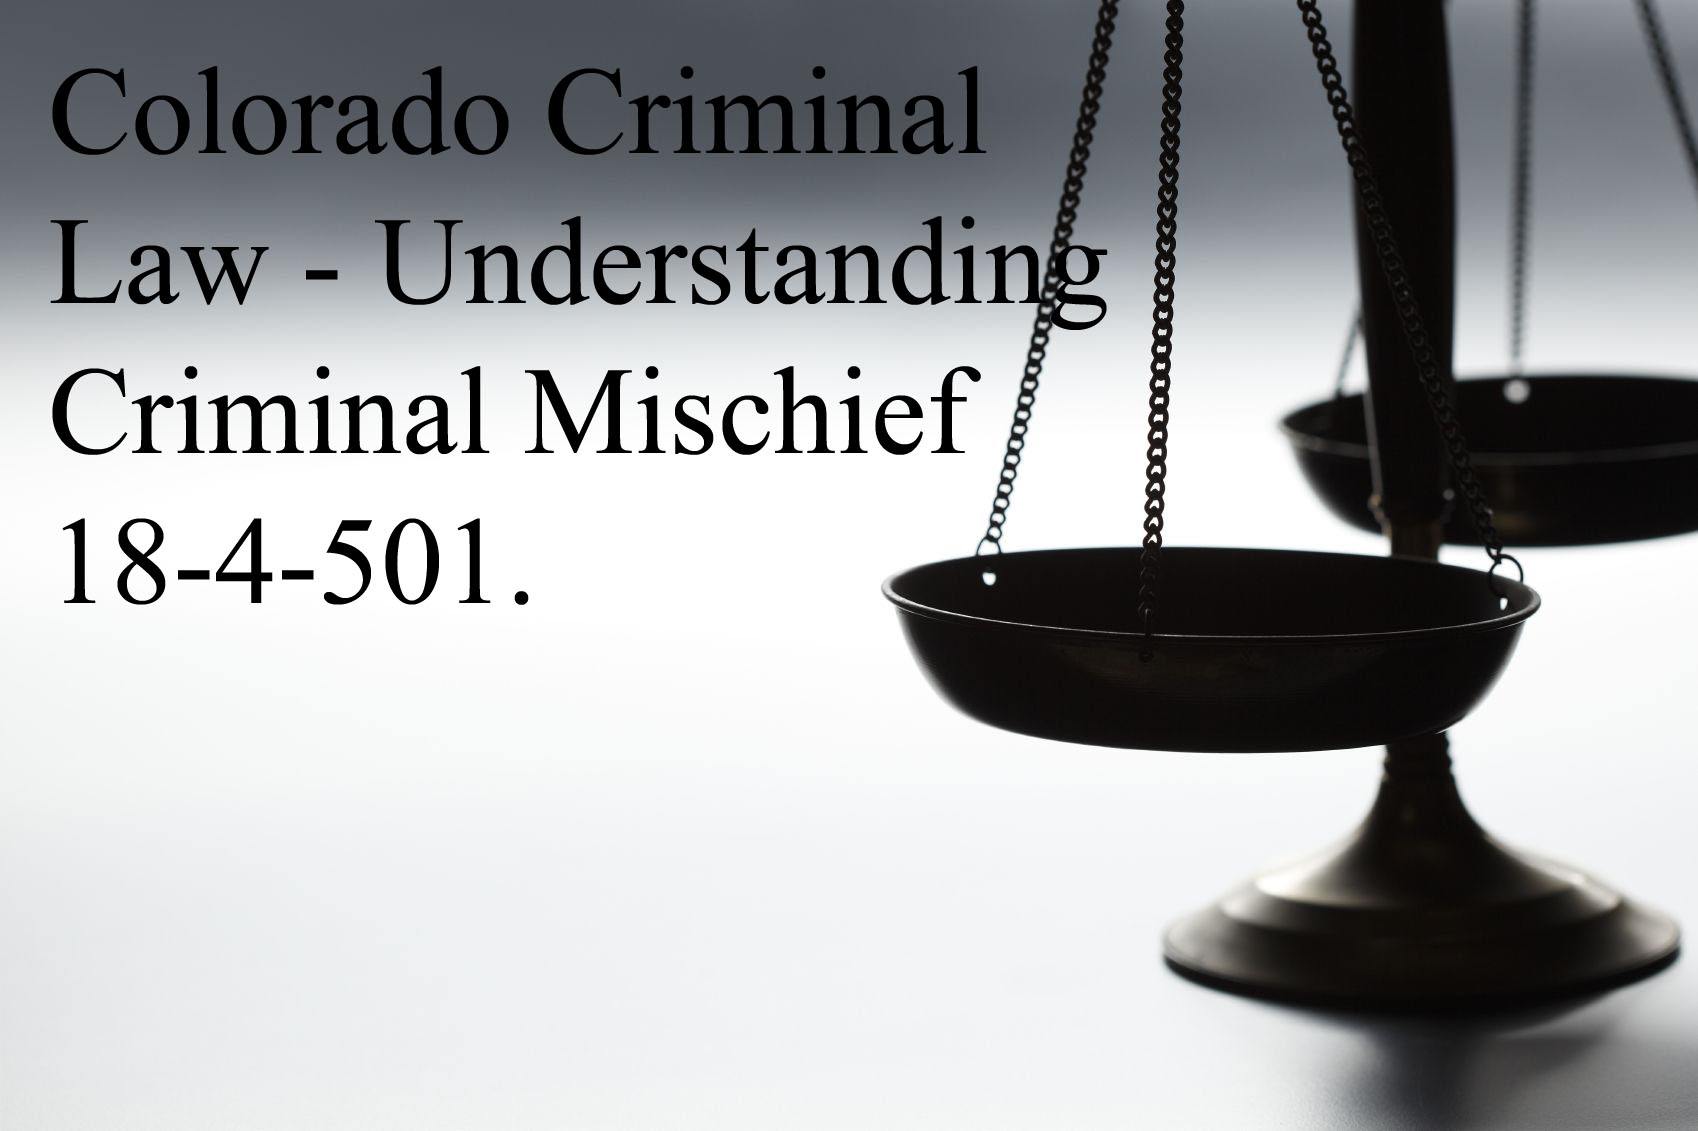 Colorado Criminal Law - Understanding Criminal Mischief 18-4-501